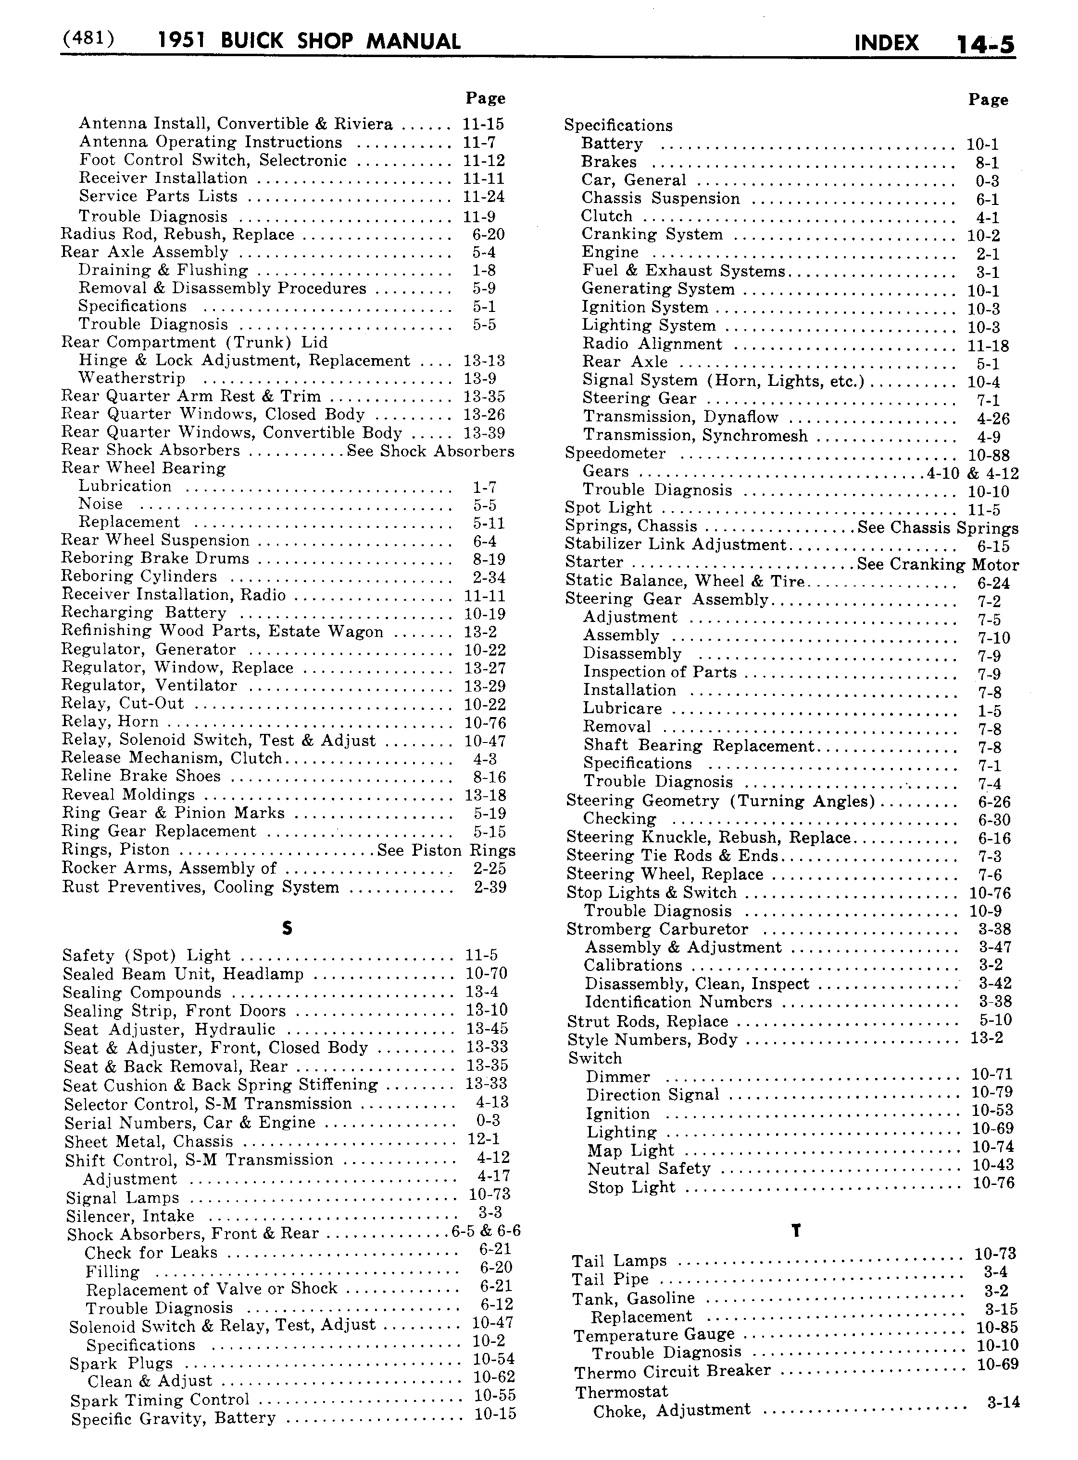 n_15 1951 Buick Shop Manual - Index-005-005.jpg